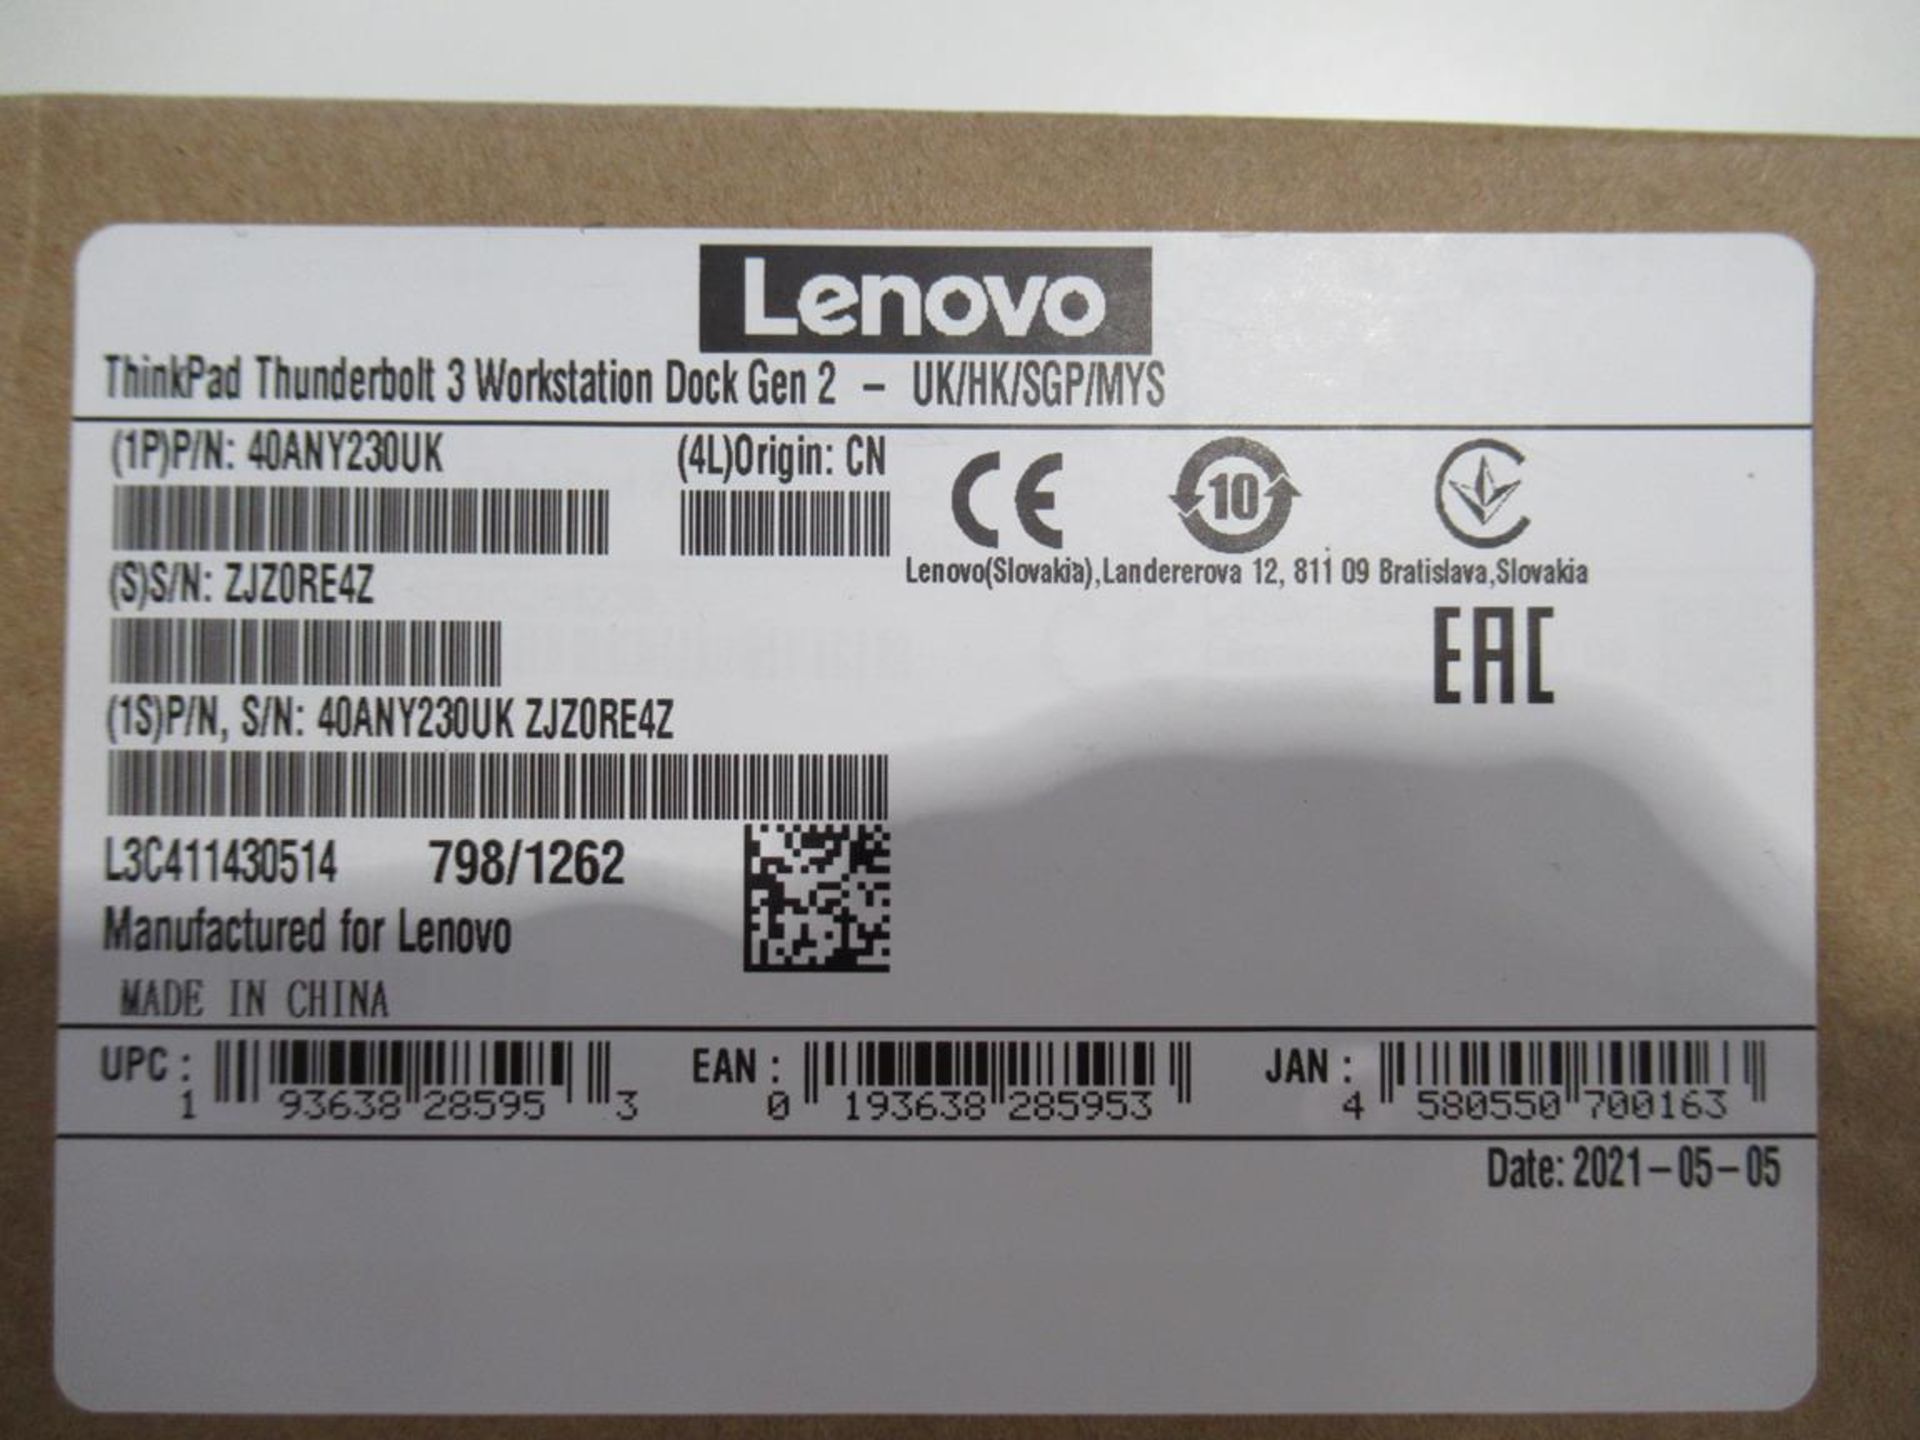 Lenovo, Thinkpad Thunderbolt Gen 2 workstation dock - Image 3 of 4